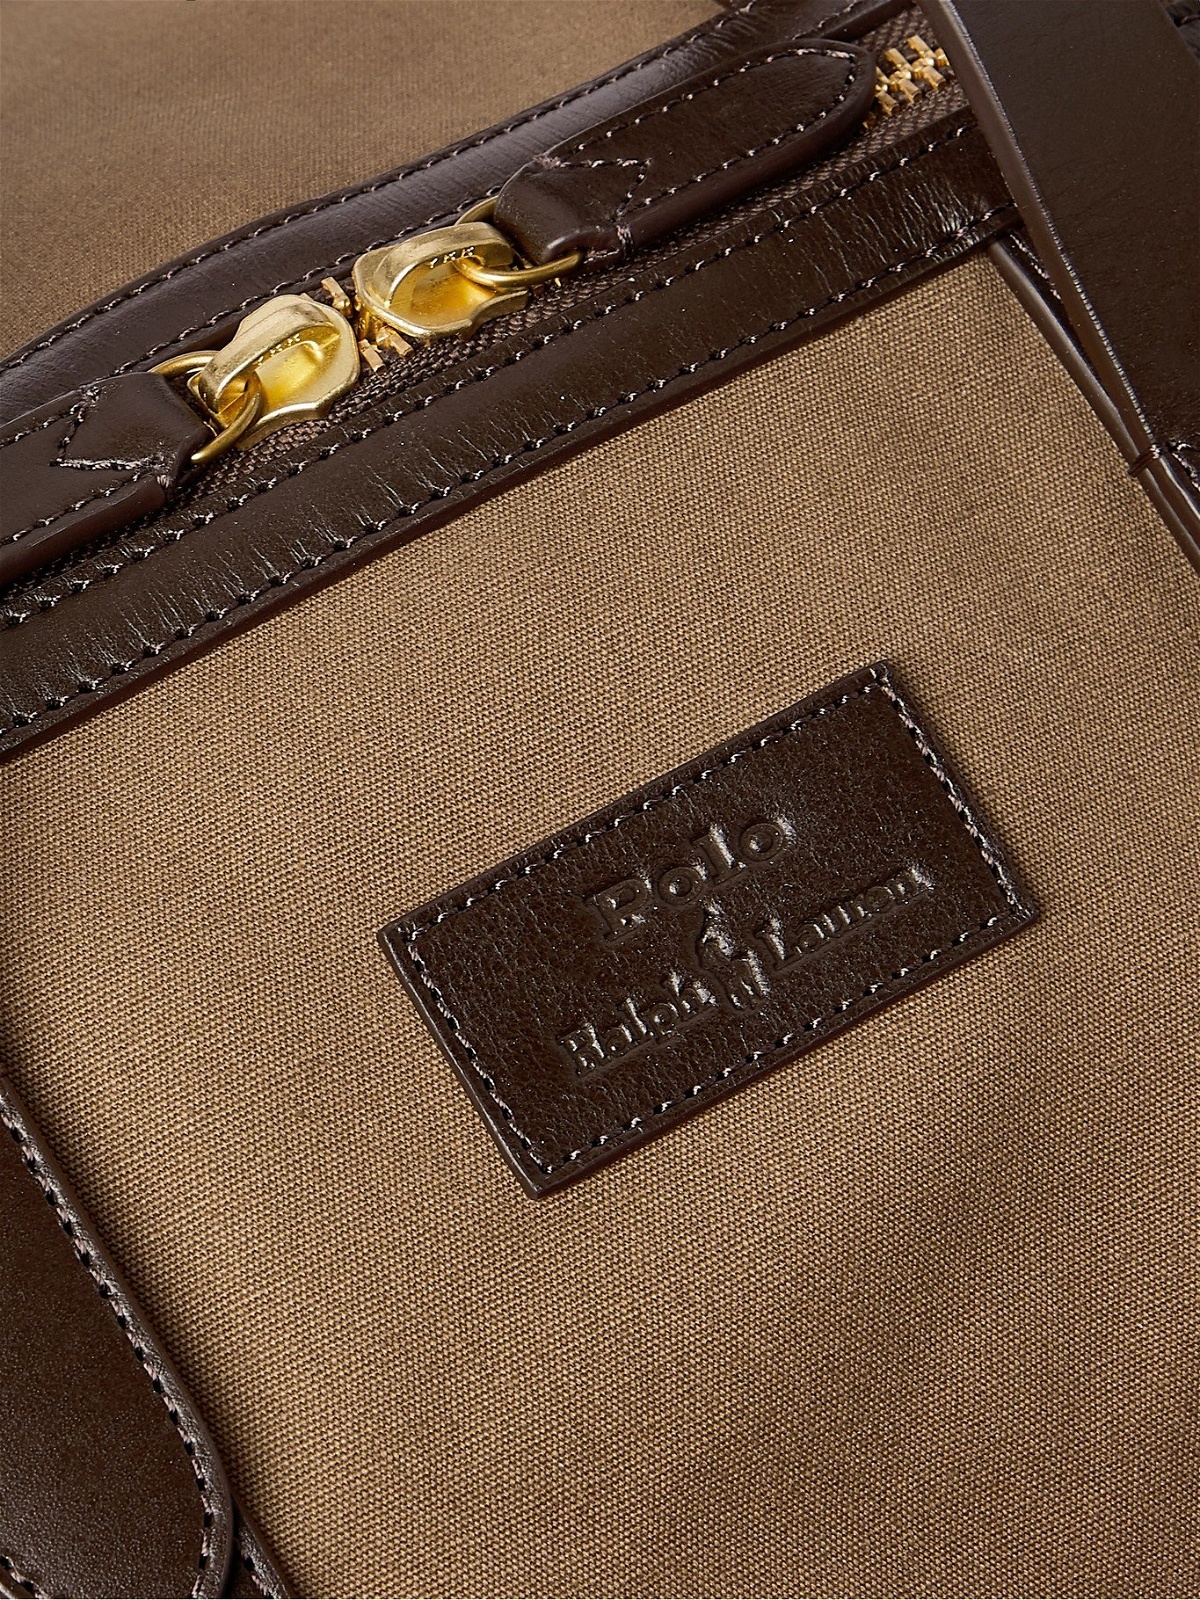 Vintage Ralph Lauren Weekender Bag / Canvas and Leather 